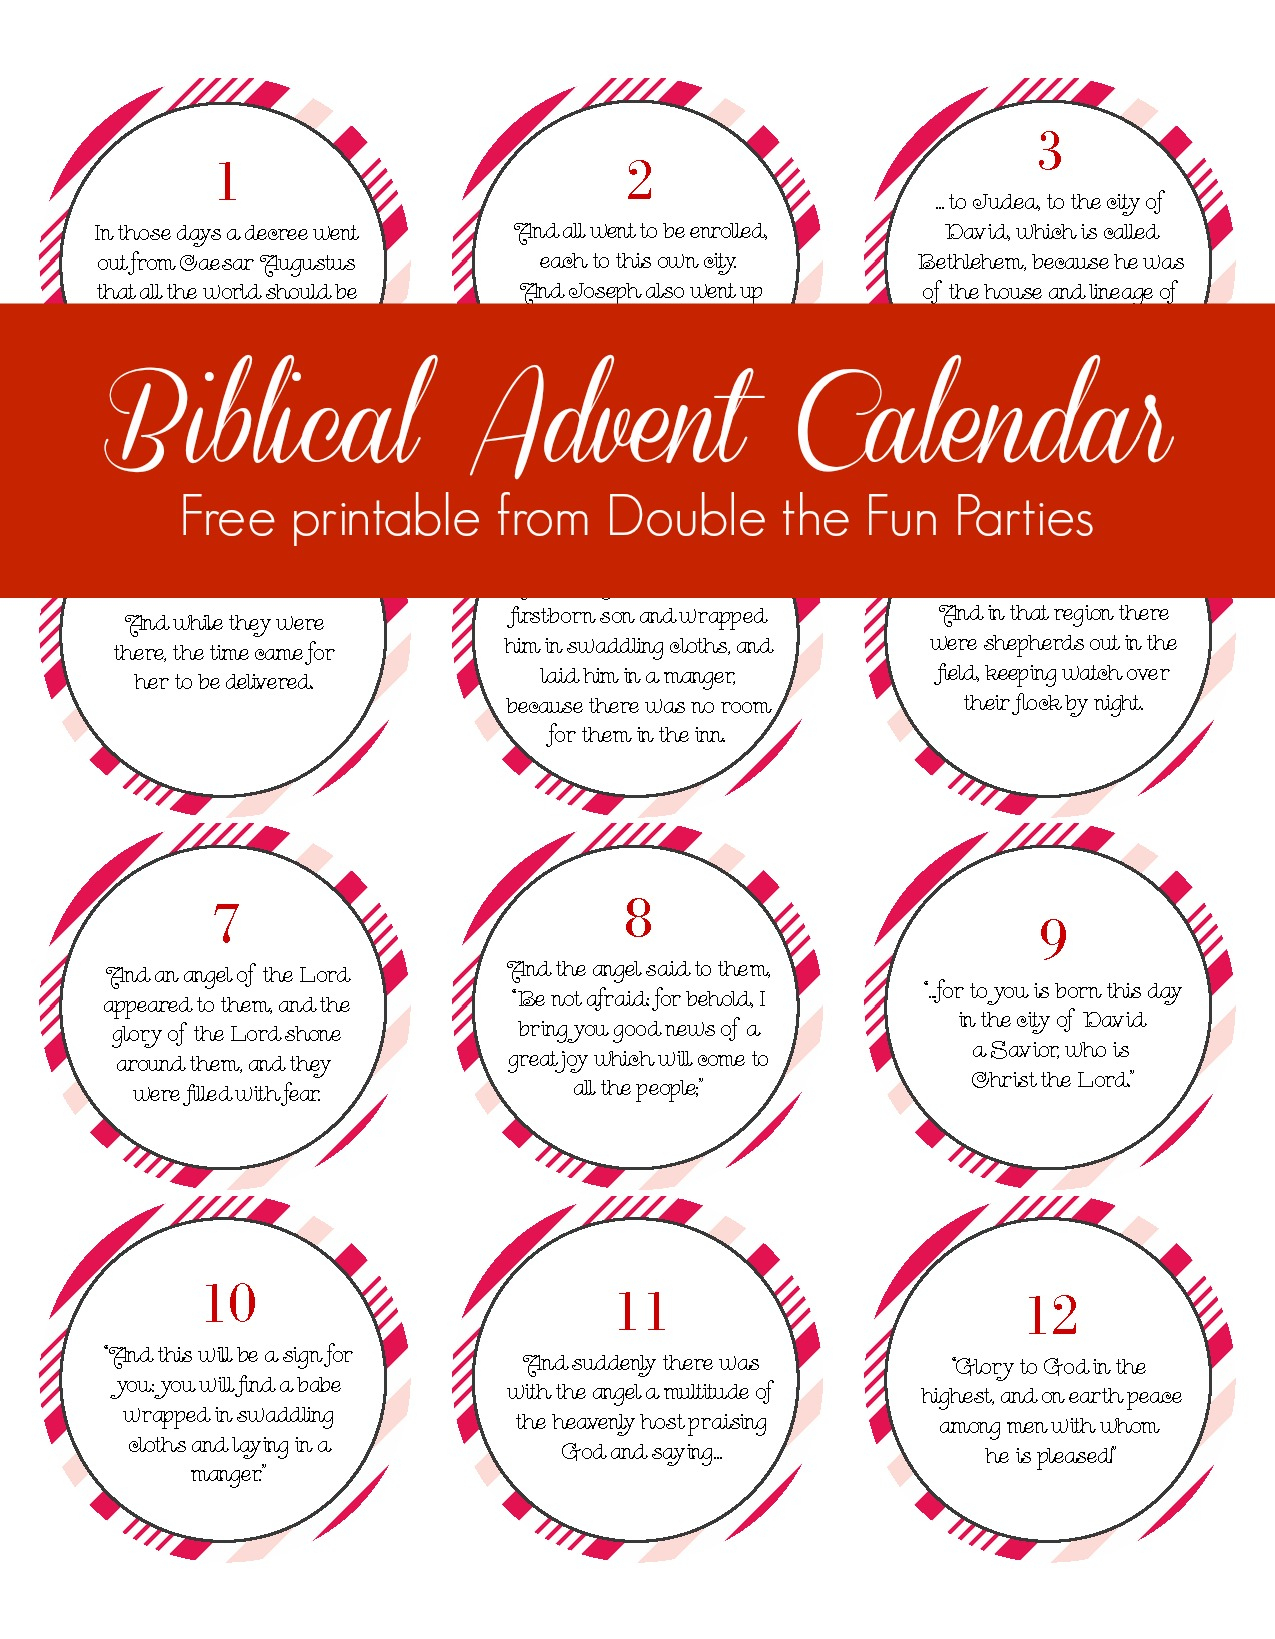 Free Biblical Advent Calendar Printable | The Party Teacher - Free Printable Nativity Story